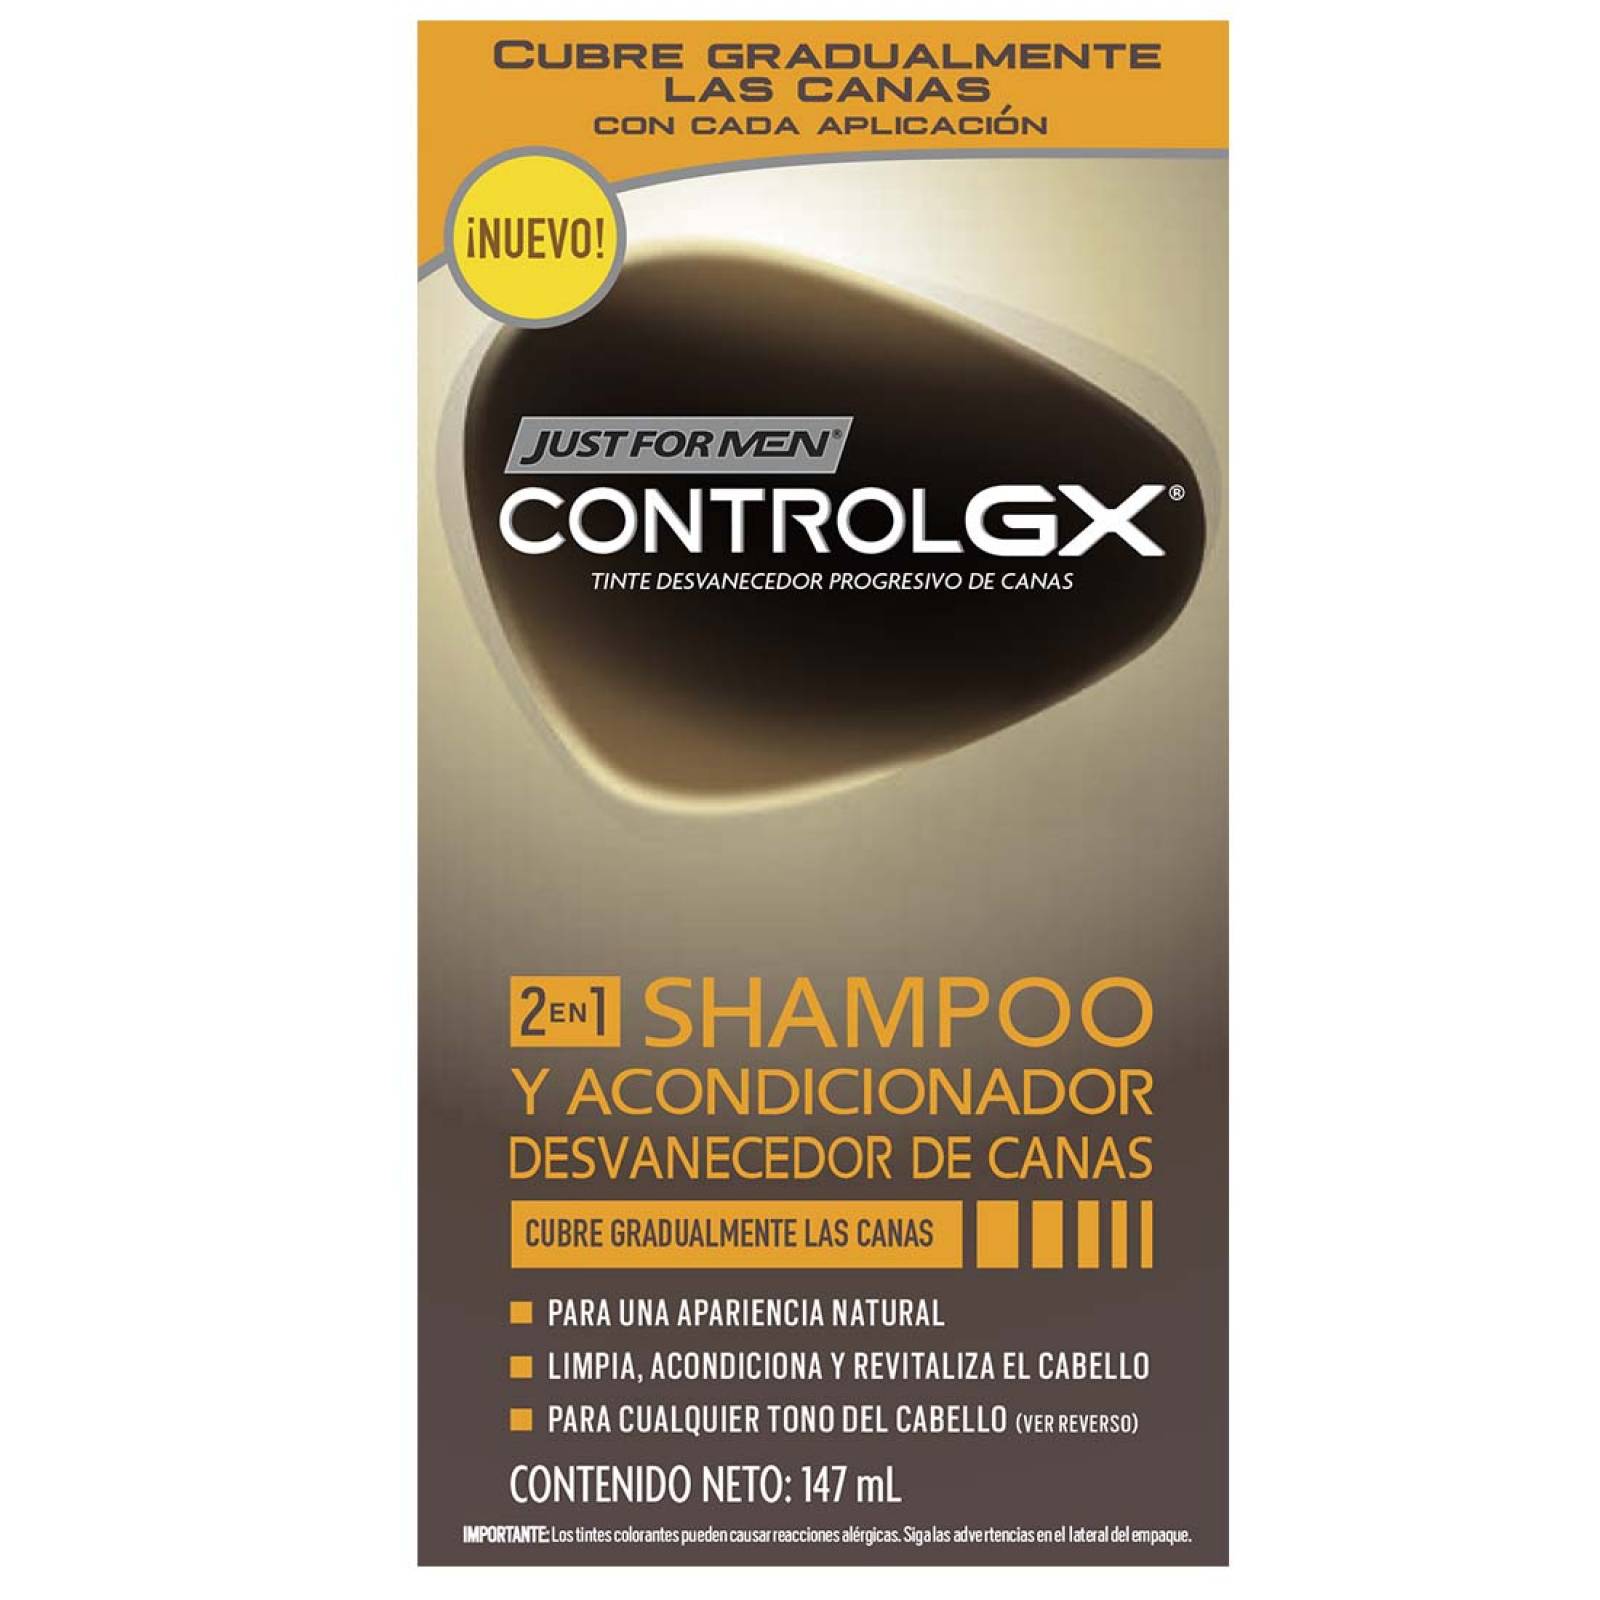 Control GX 2 en 1 Shampoo- Acondicionador canas Just for Men